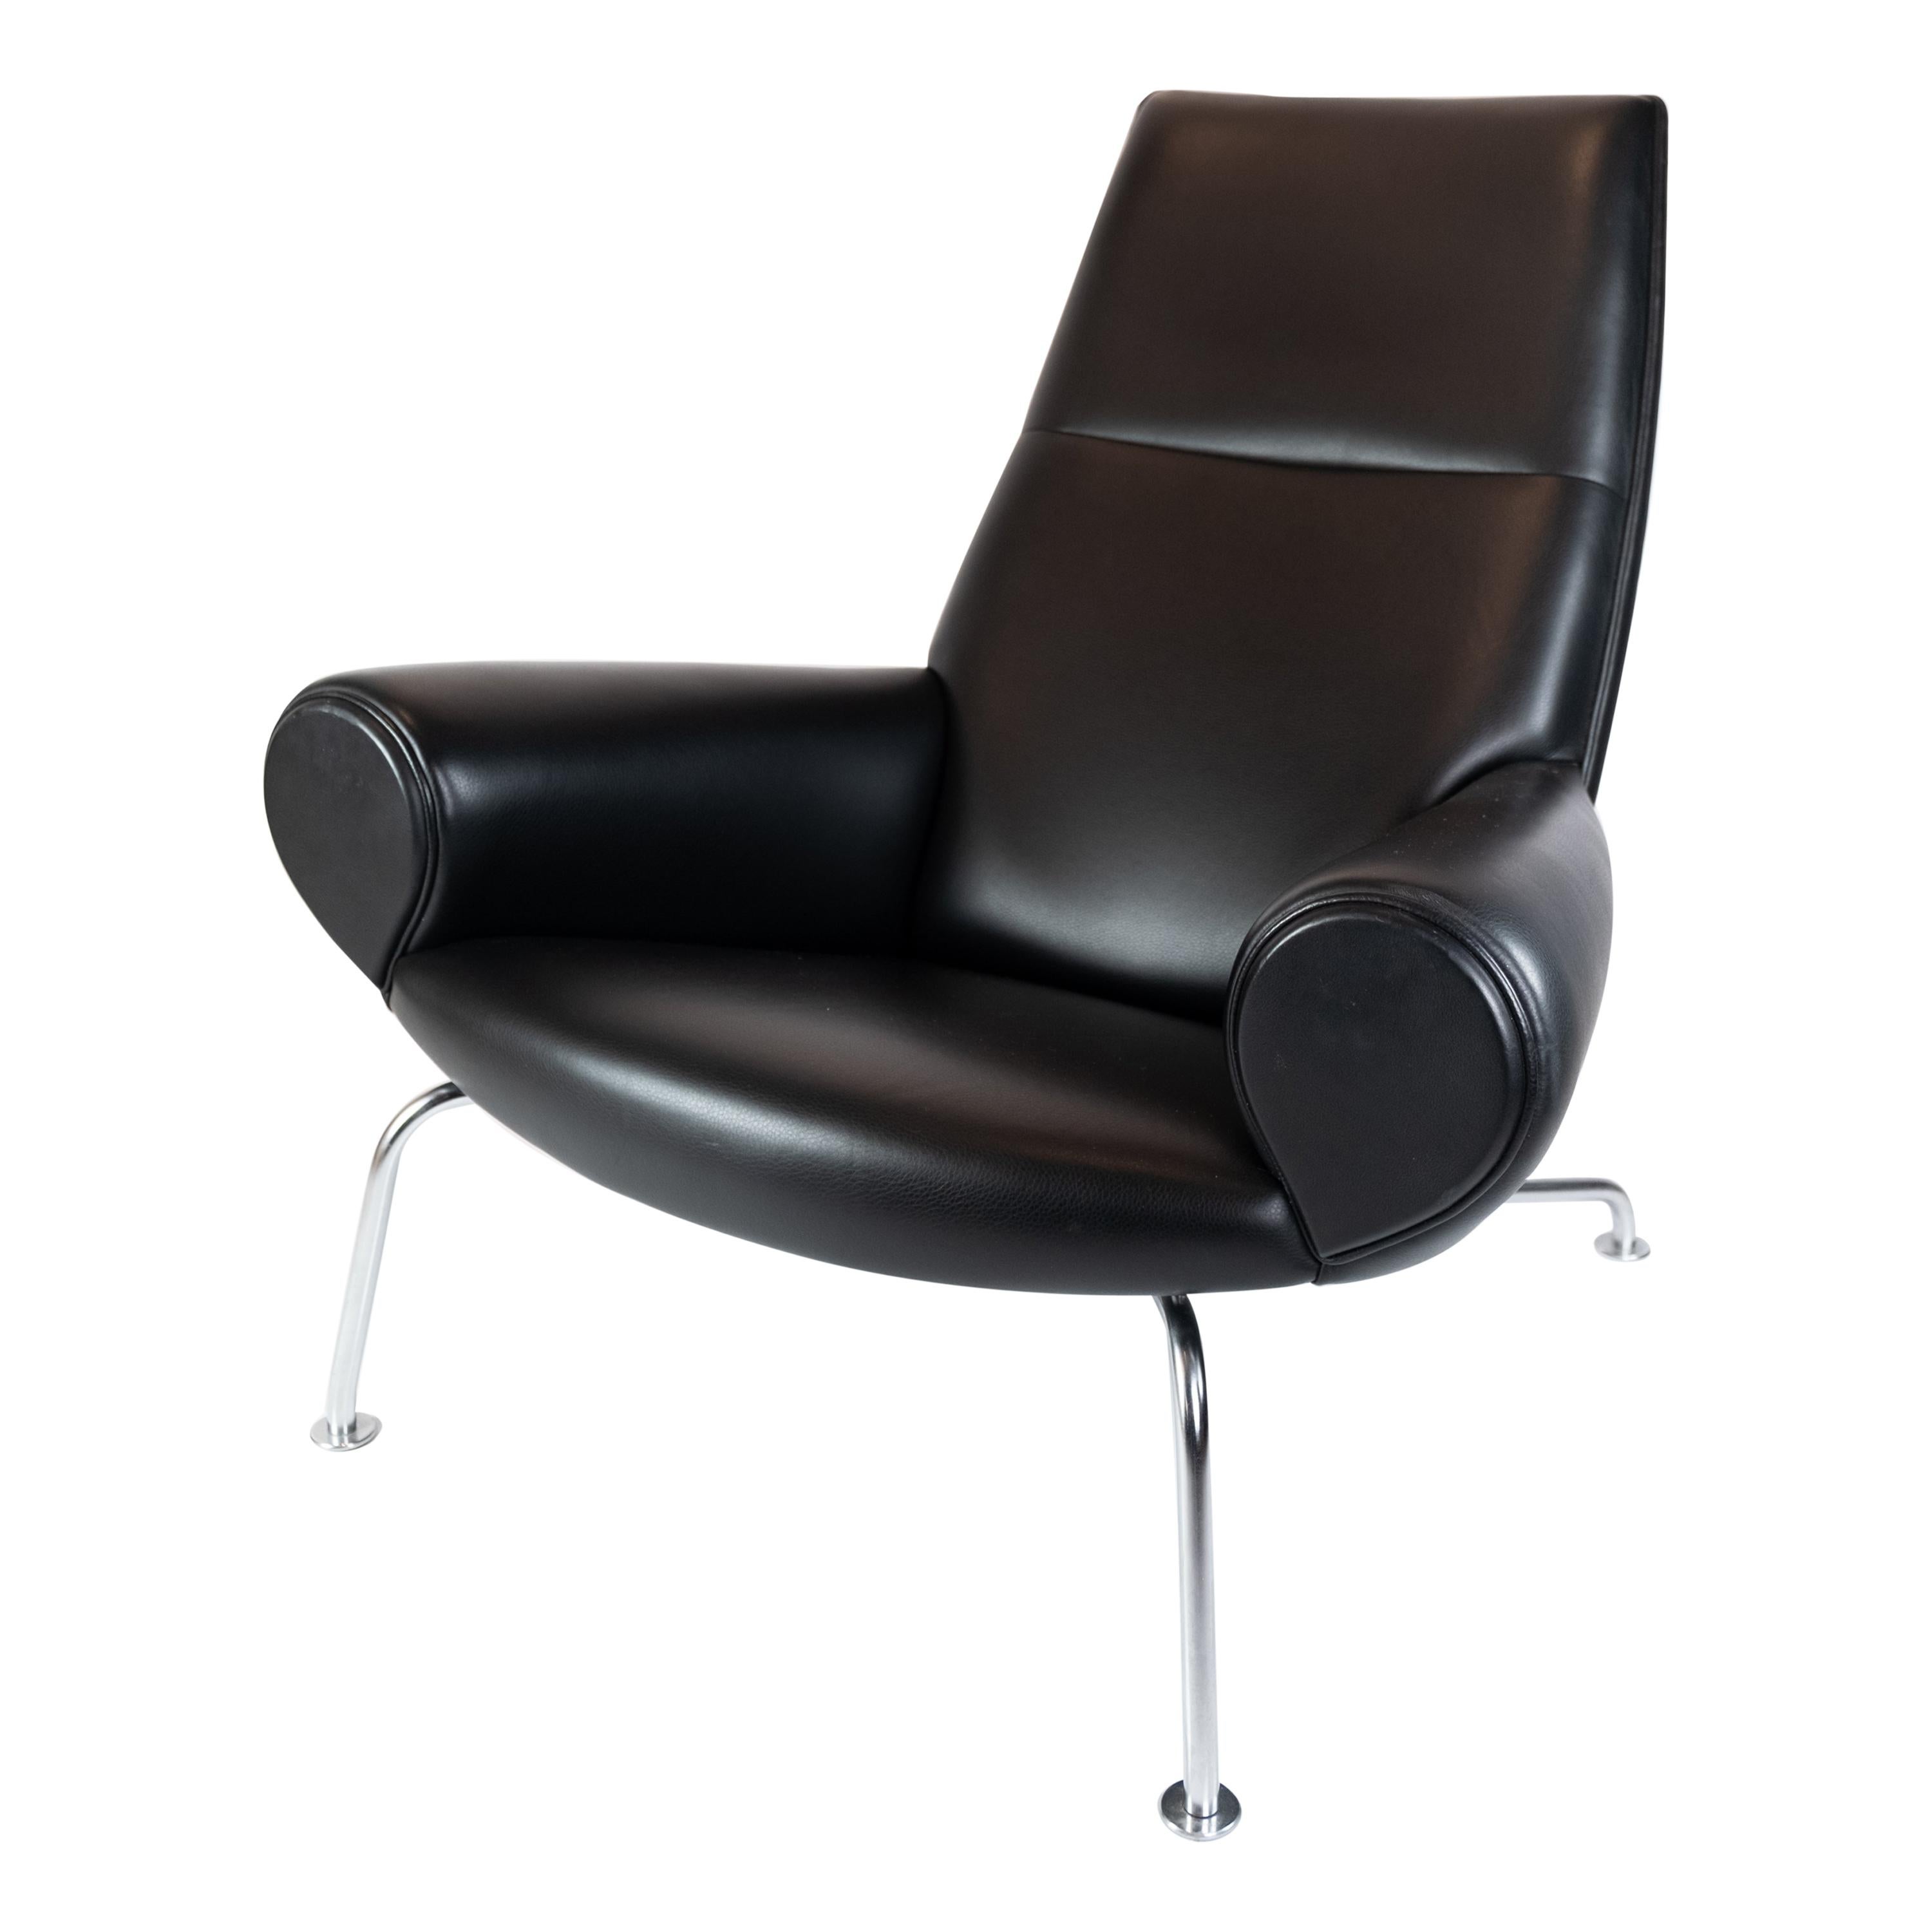 Queen Chair, Model EJ 101, Designed by Hans J. Wegner